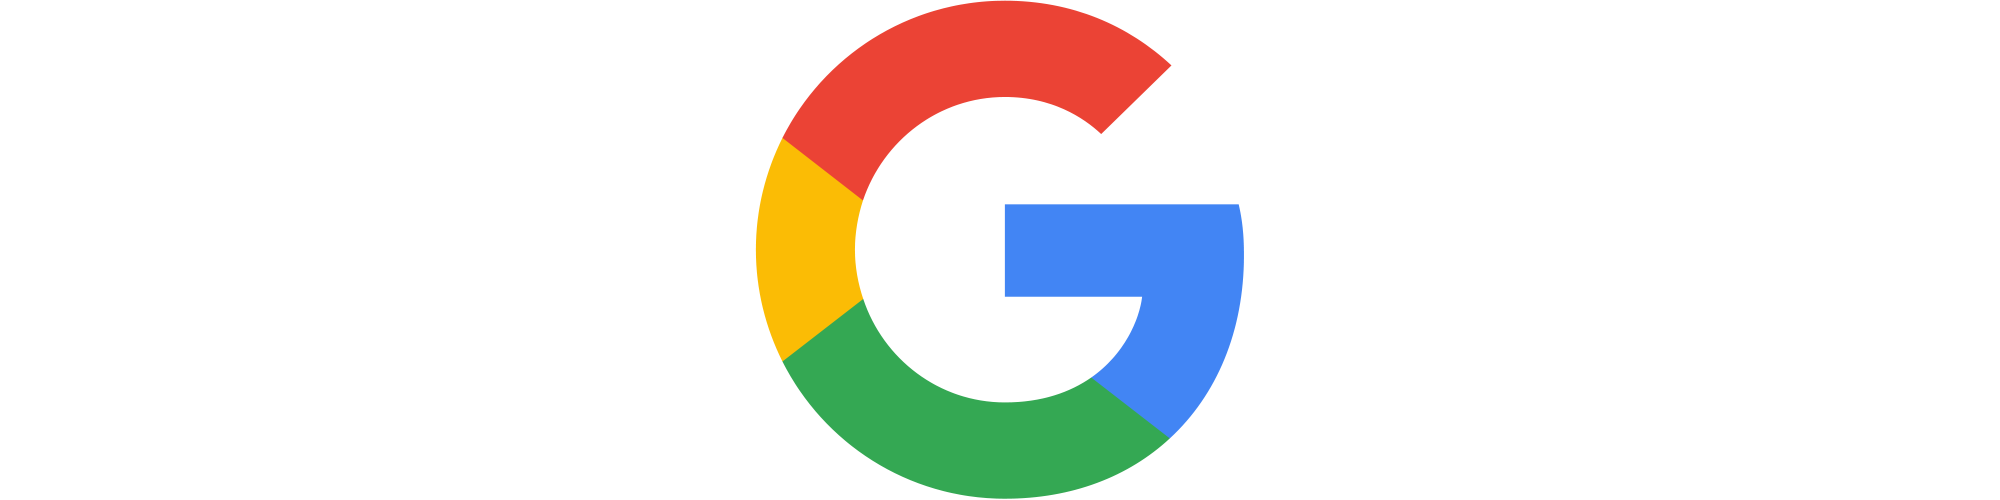 Google's logo uses multi-color color psychology